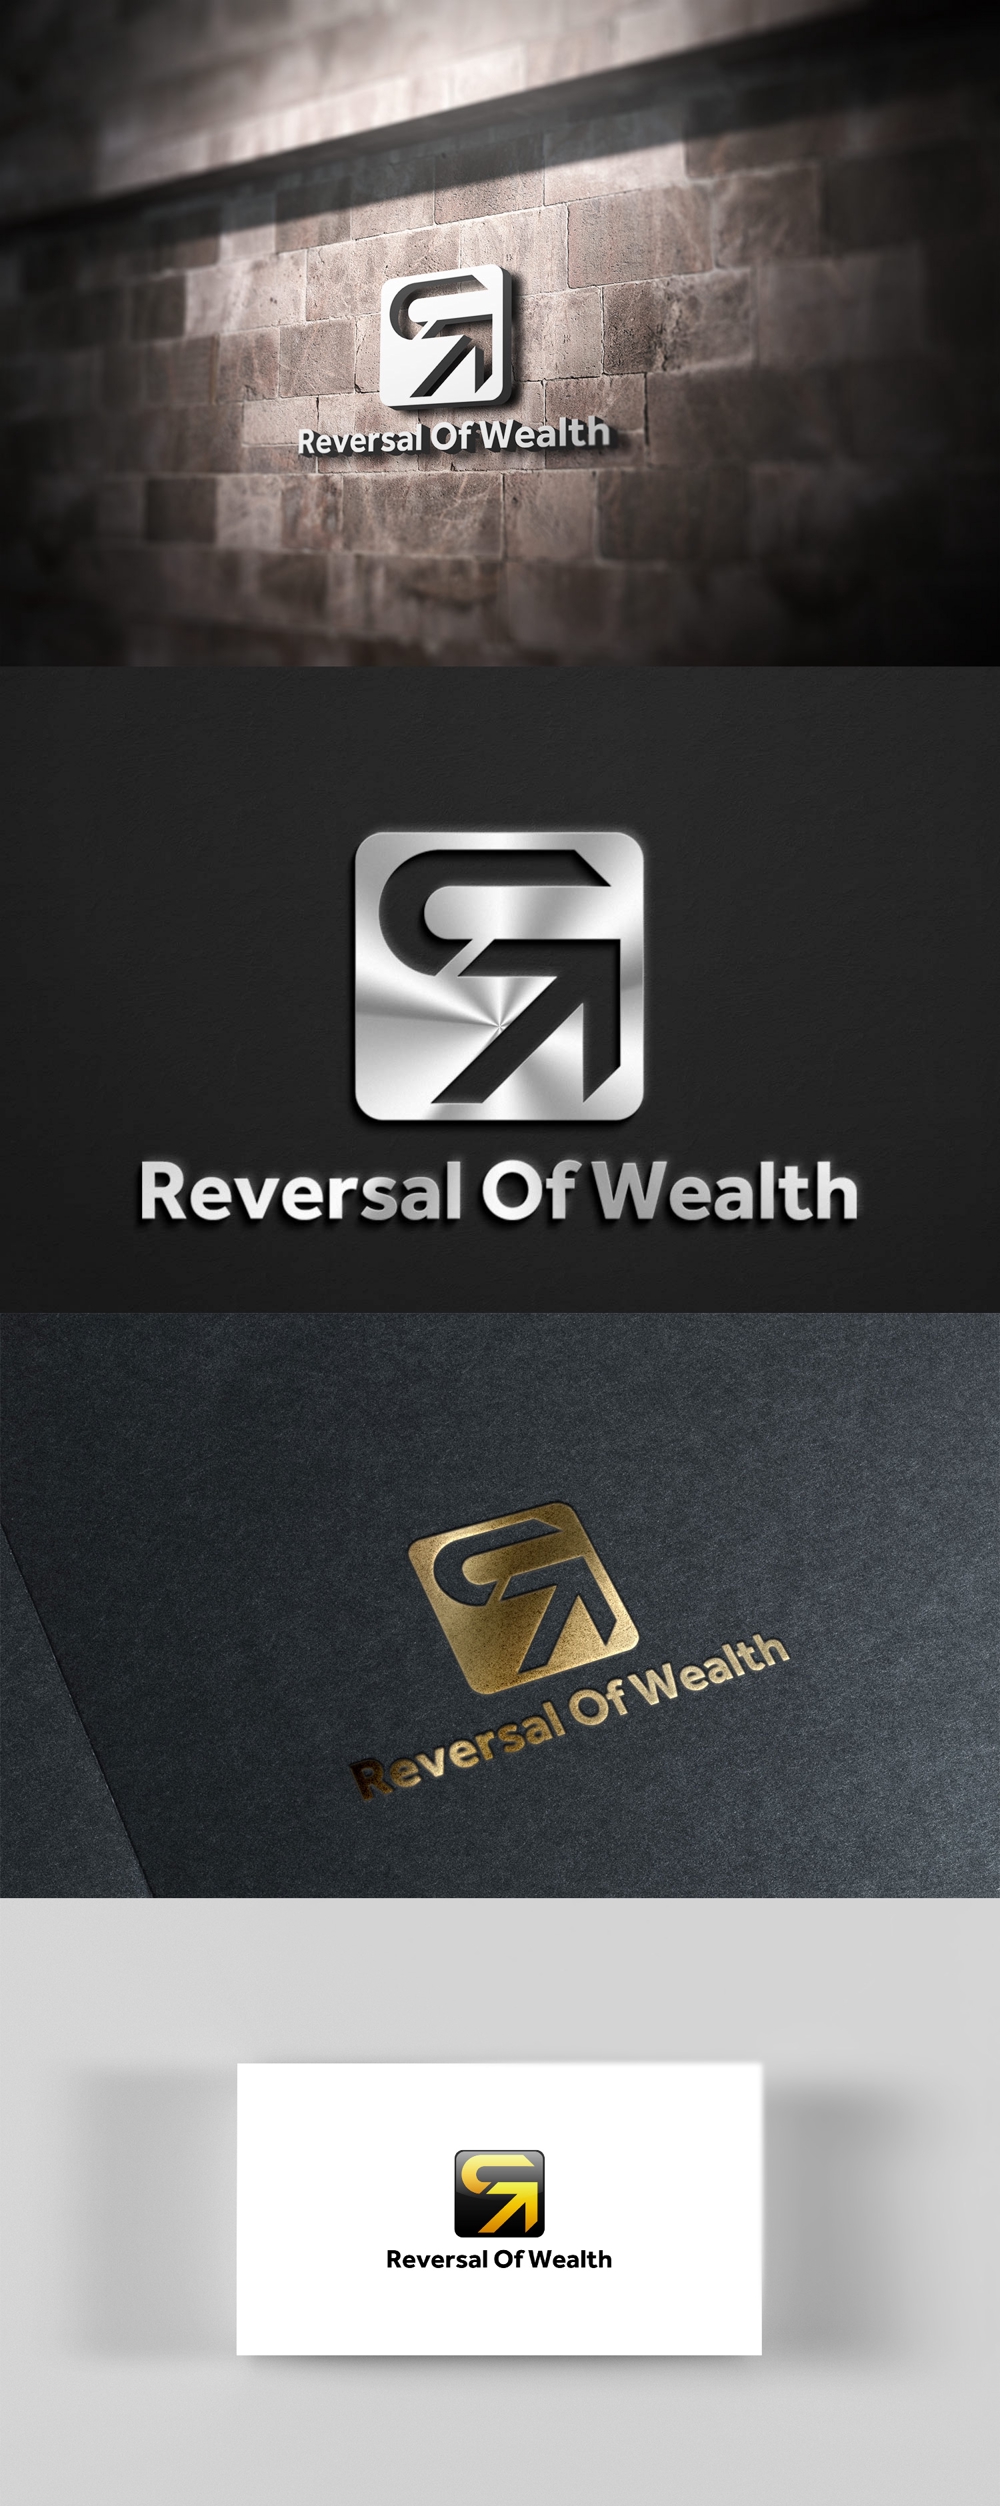 Reversal-Of-Wealth-02-04.jpg